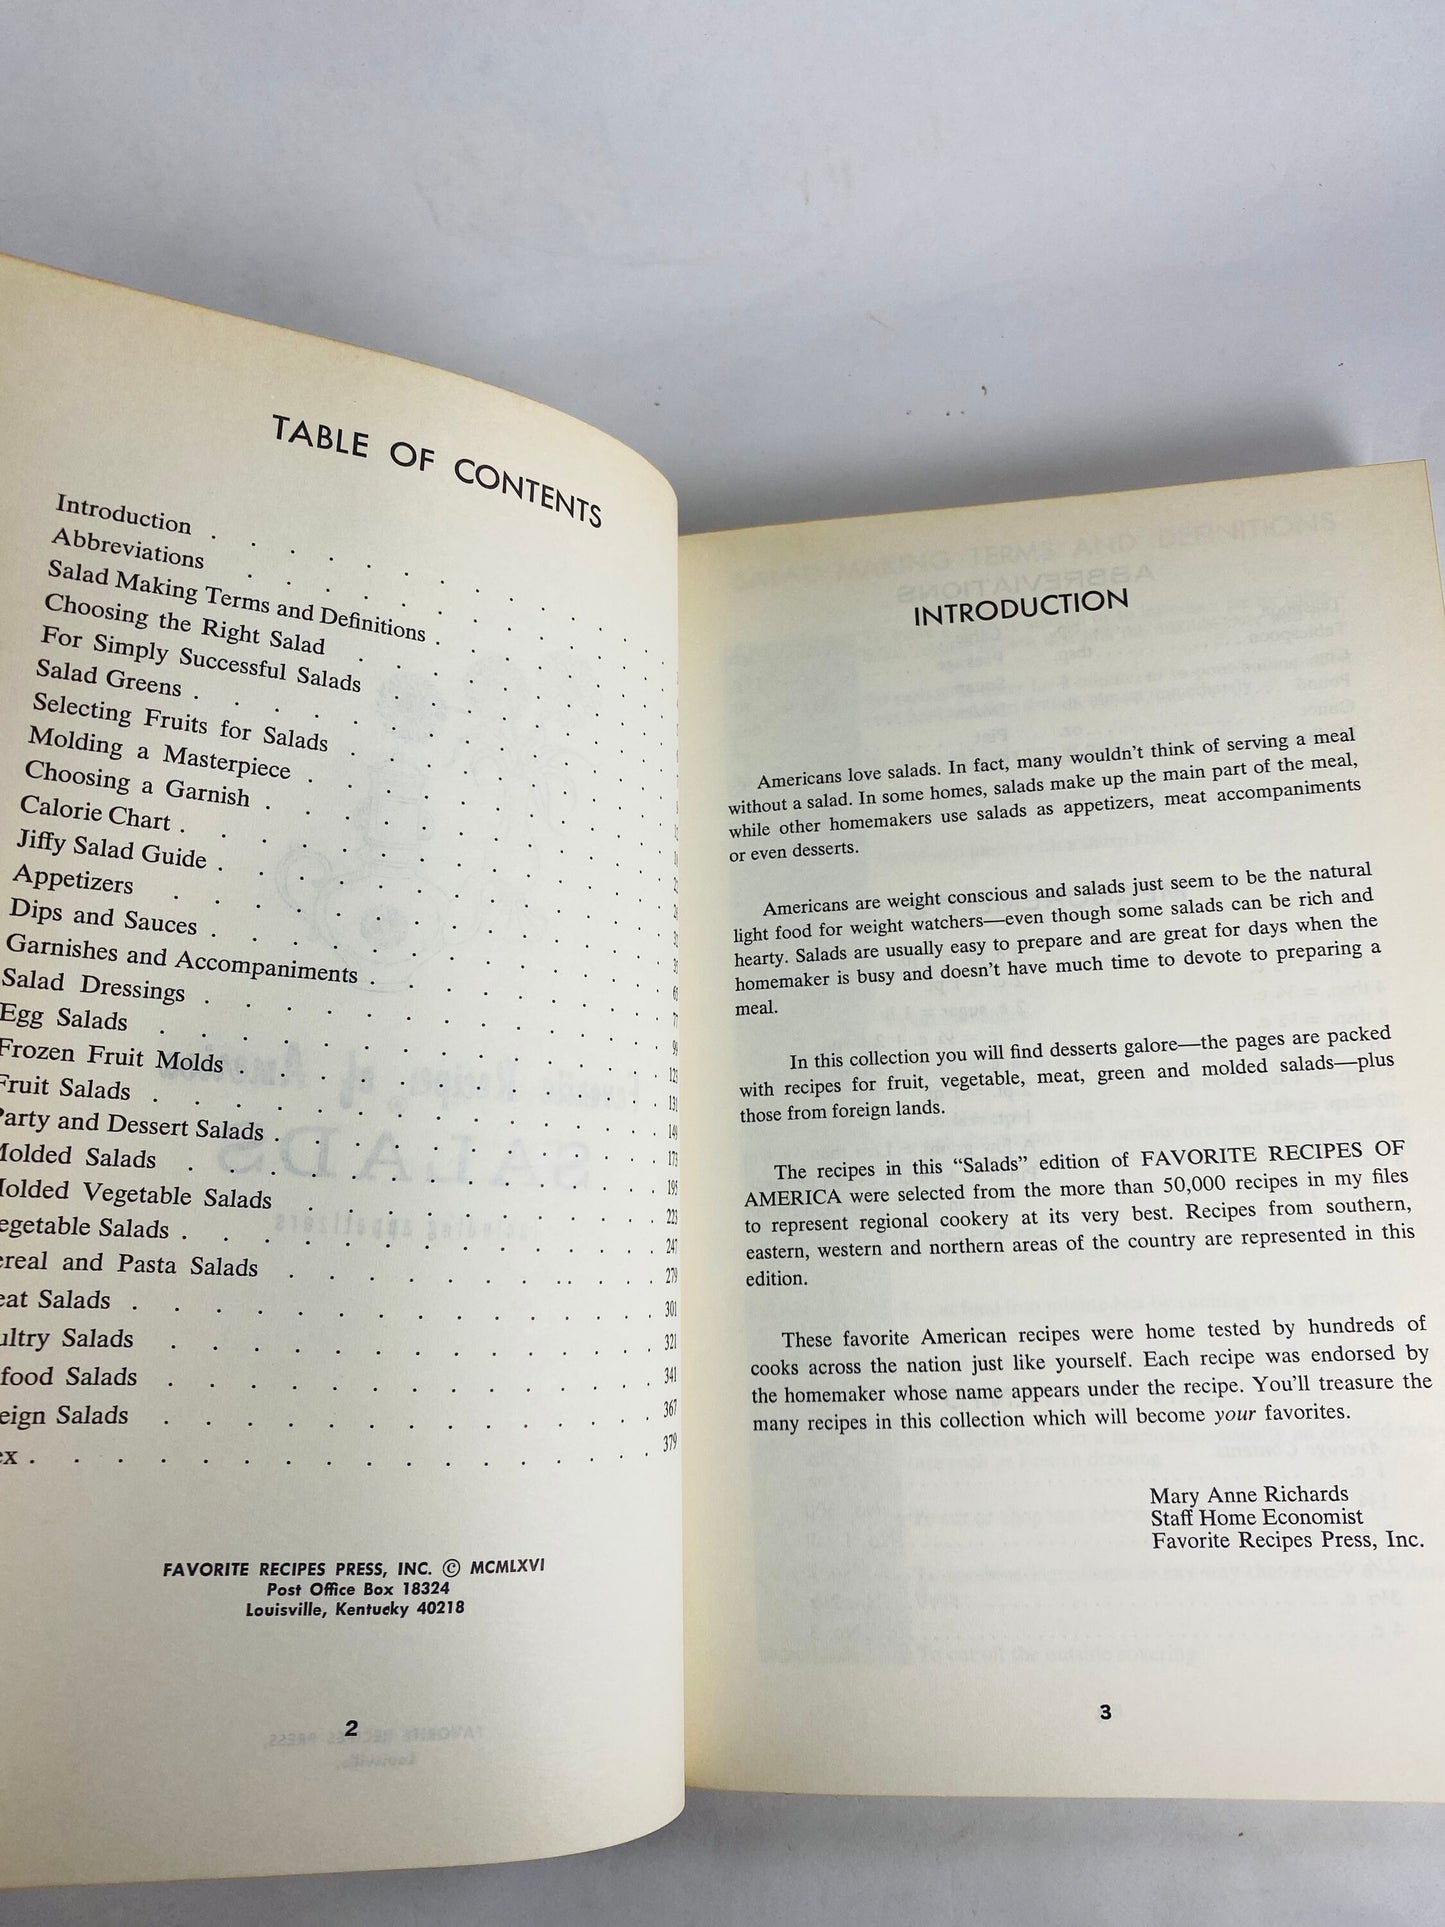 Casseroles and salads vintage Favorite Recipes of America cookbooks circa 1966 kitchen gingham covers retro Prop decor